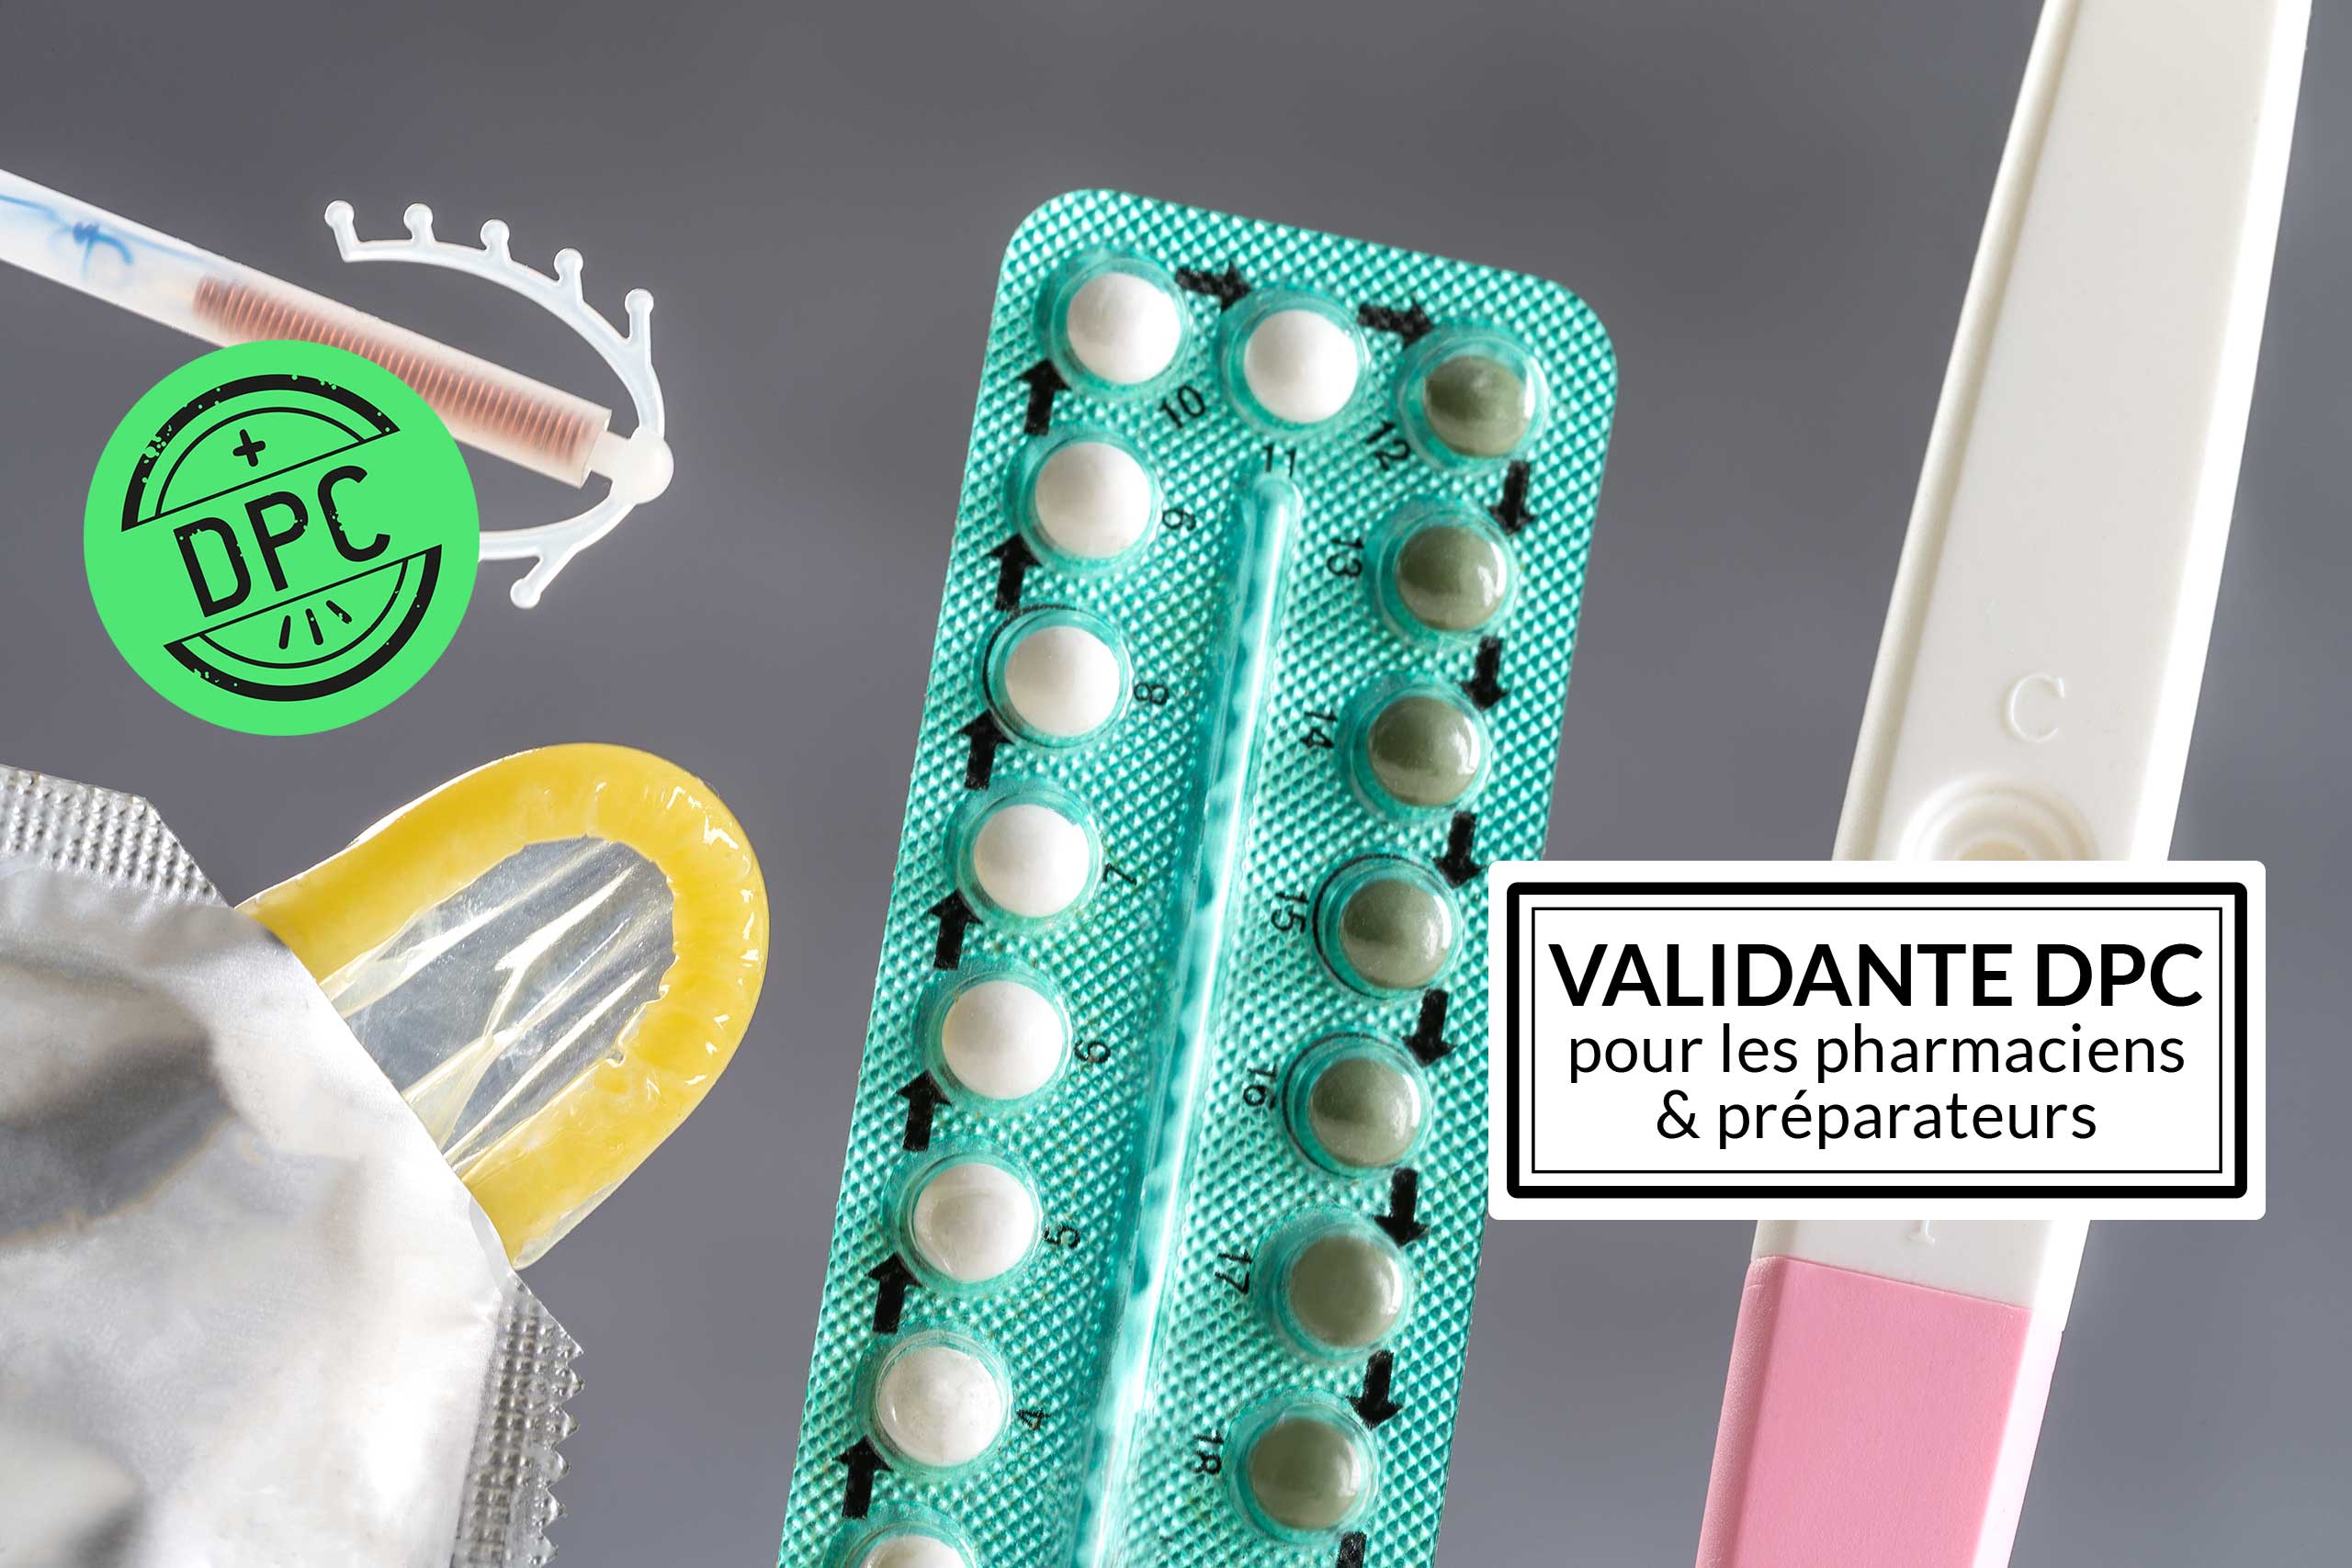 Formation contraception, pilules oestroprogestatives, microprogestatives, dispositifs intra-utérins, stérilet validante DPC